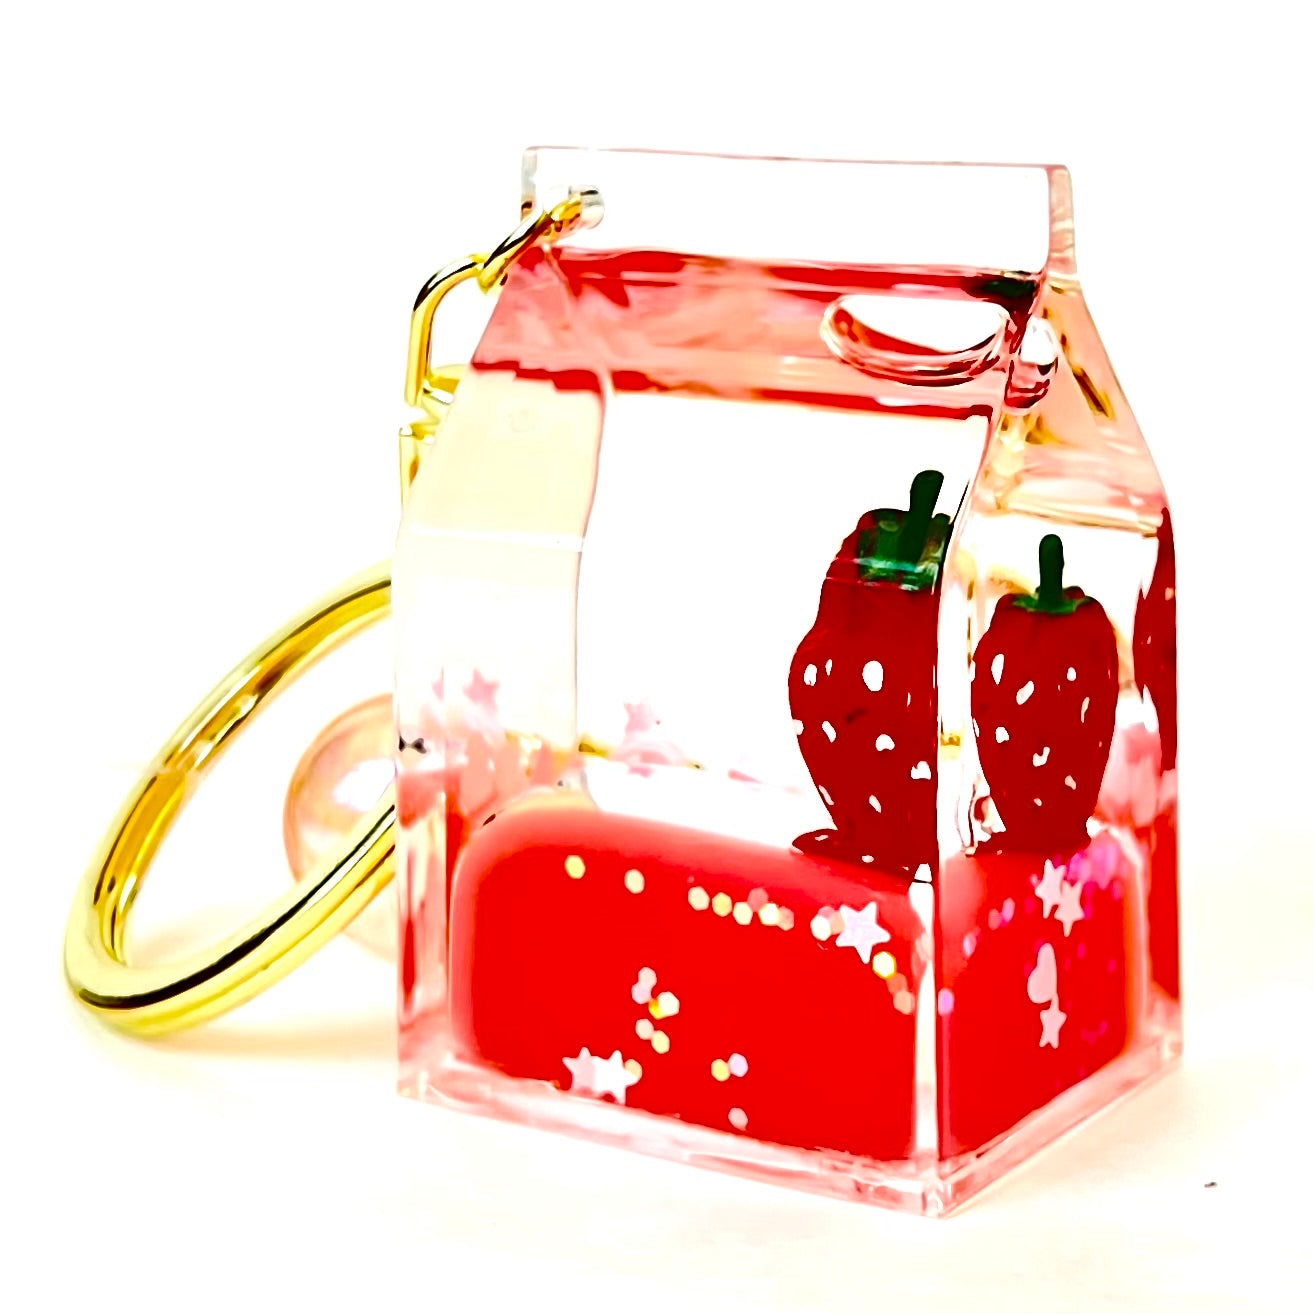 Strawberry Key Chain / Charm – Wrapables